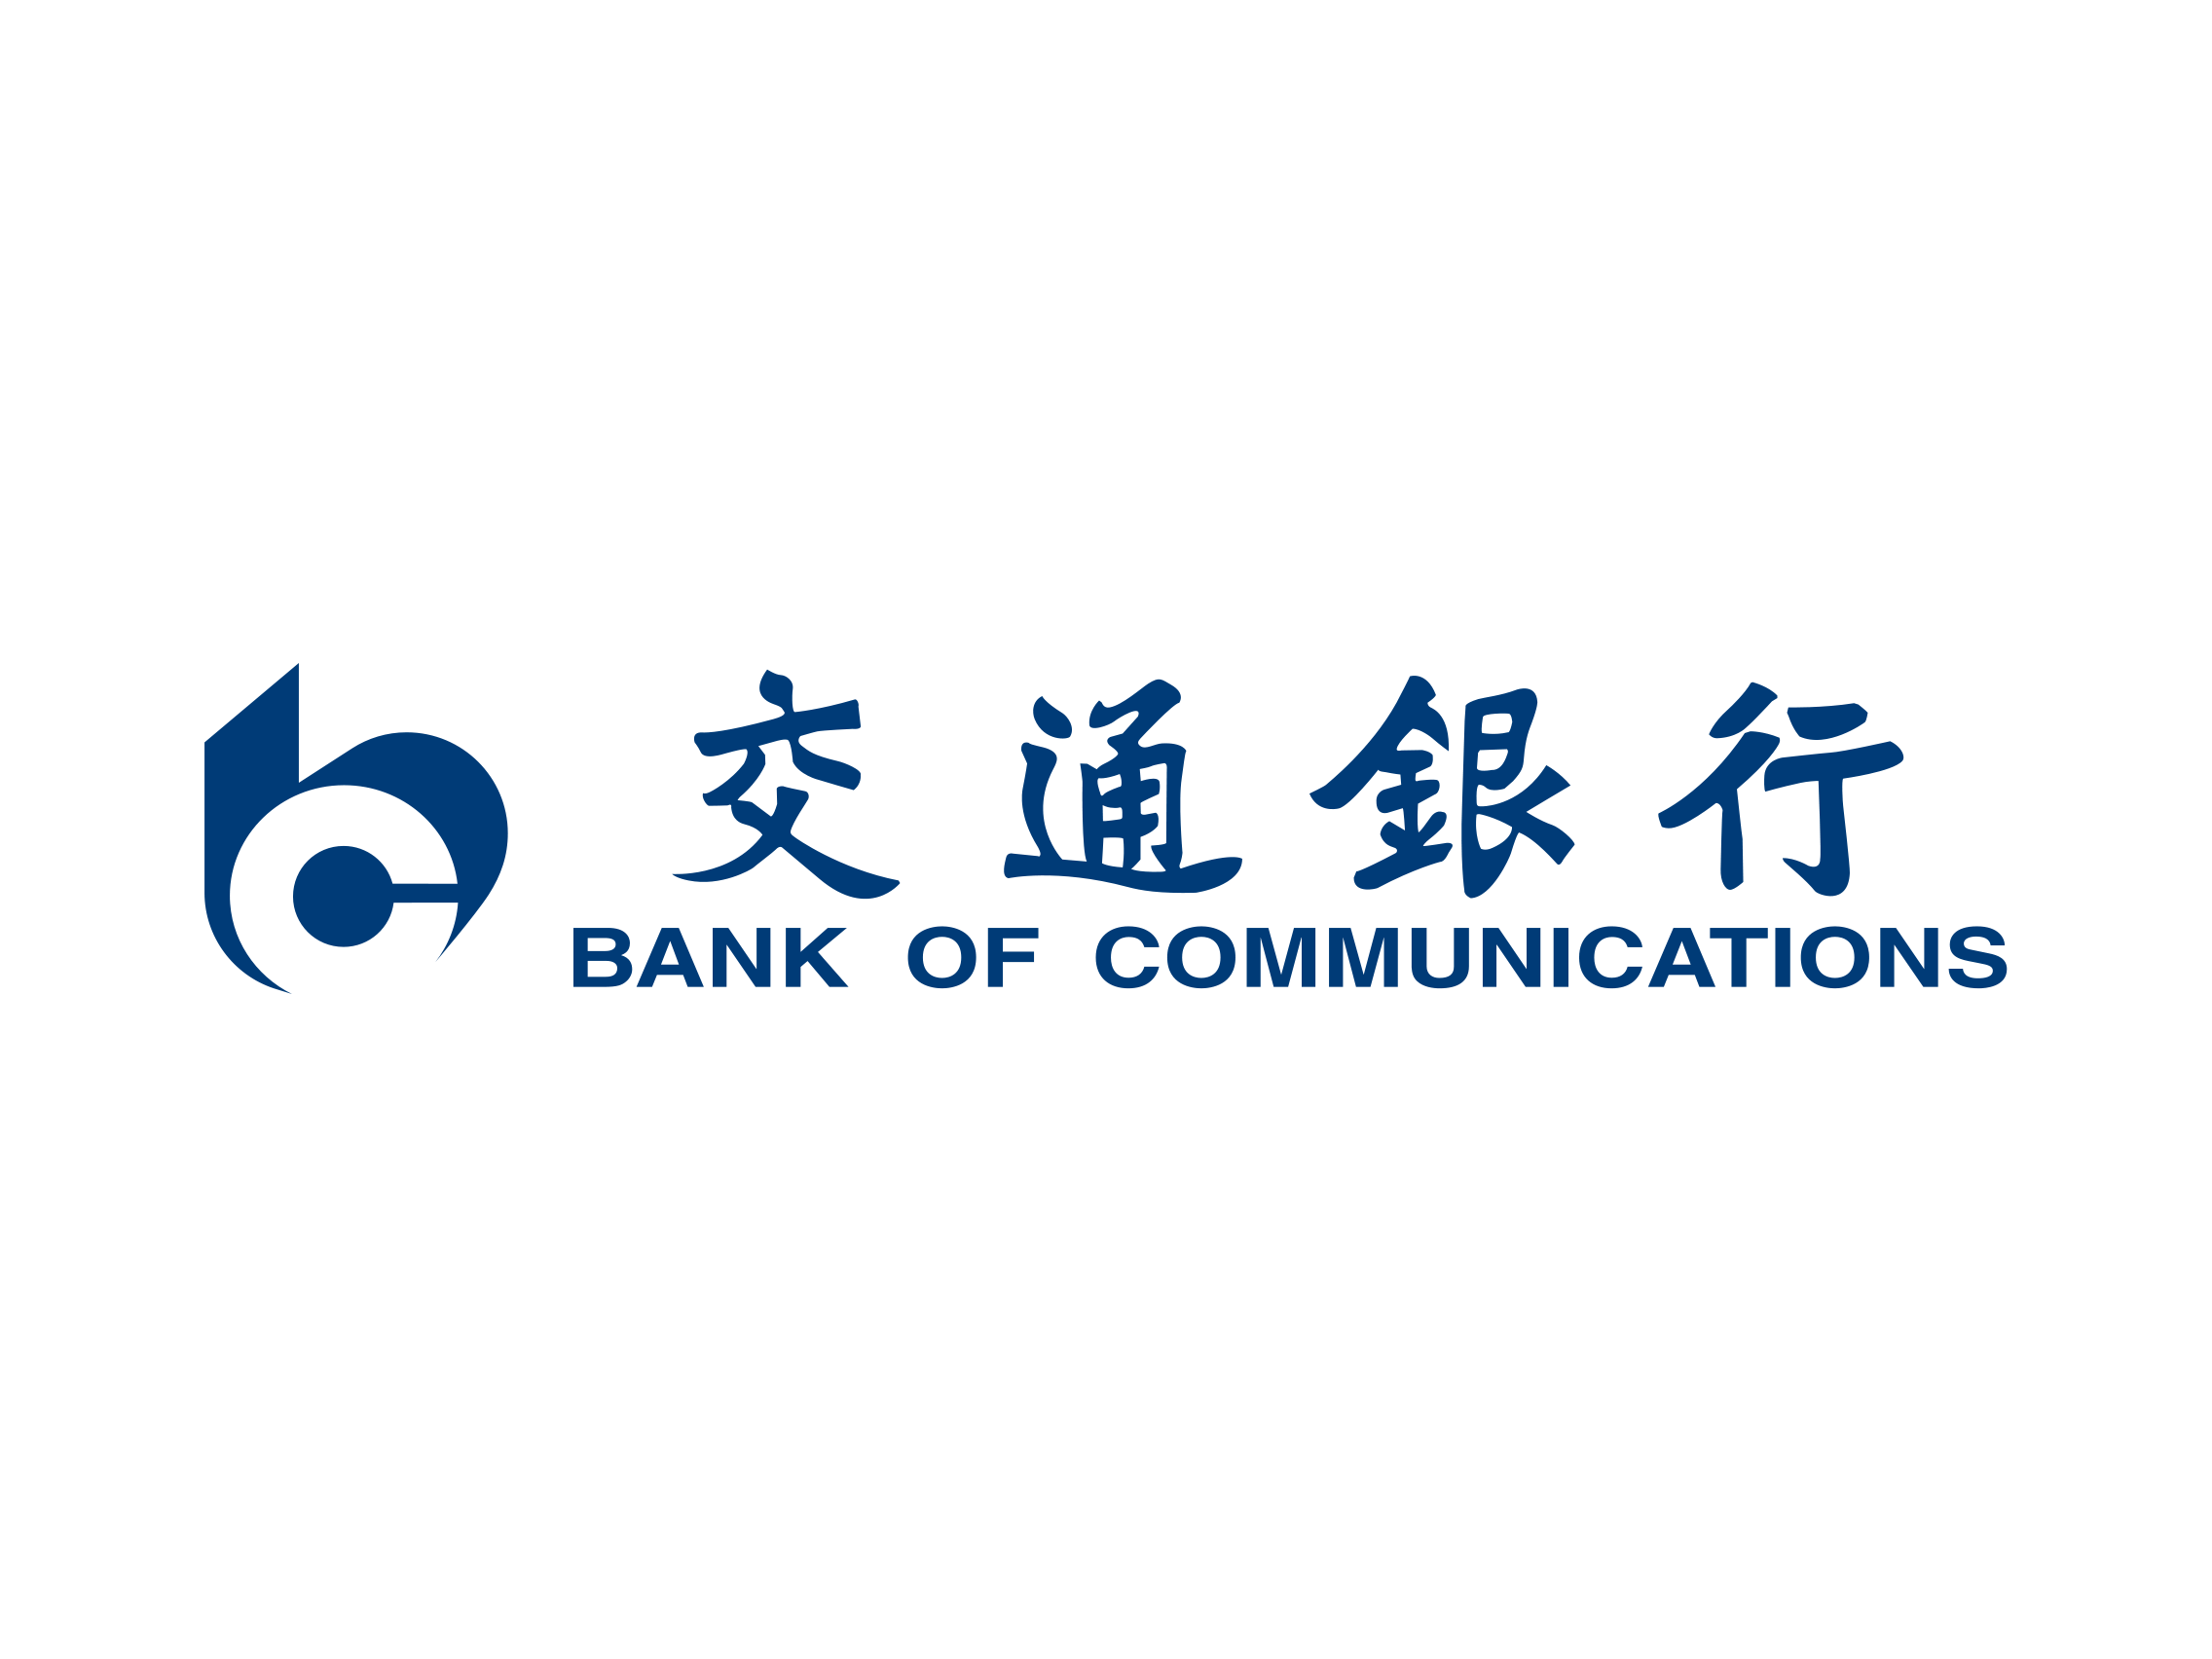 Comm Logo - Bank of Communications logo logotype - Logok